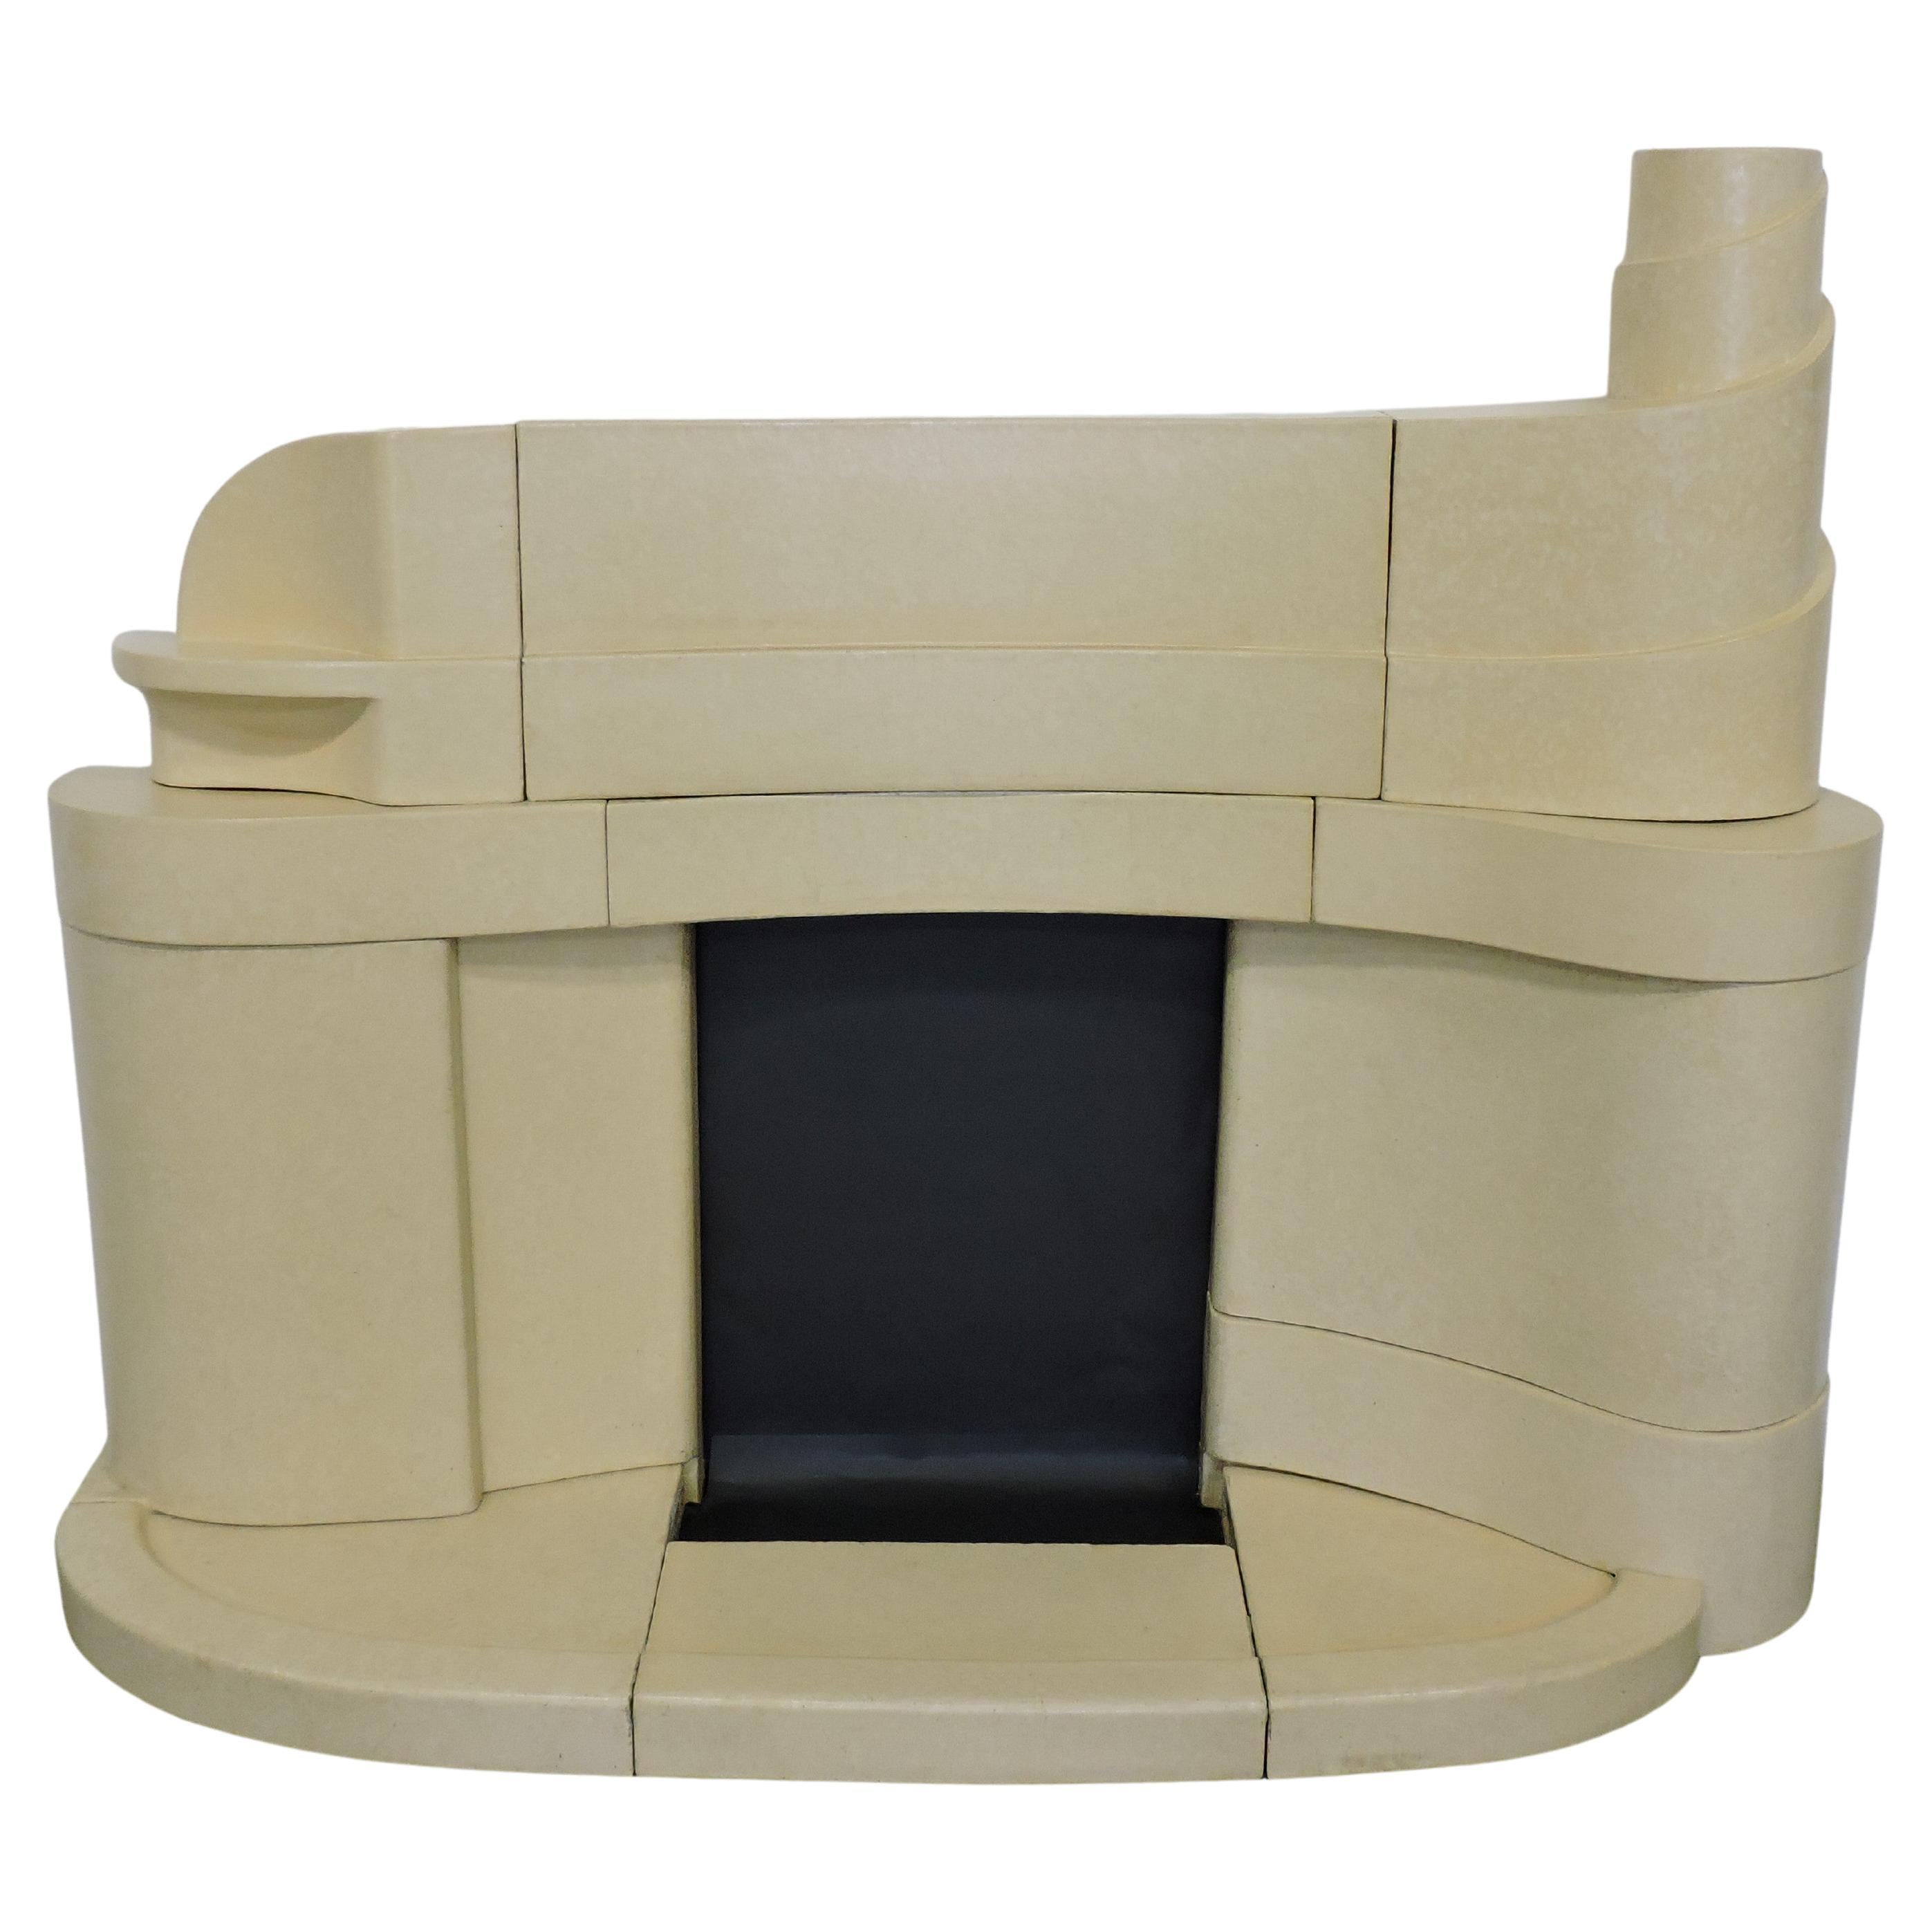 Art Deco Curved and Wavy Streamline Ceramic Fireplace Mantel Surround